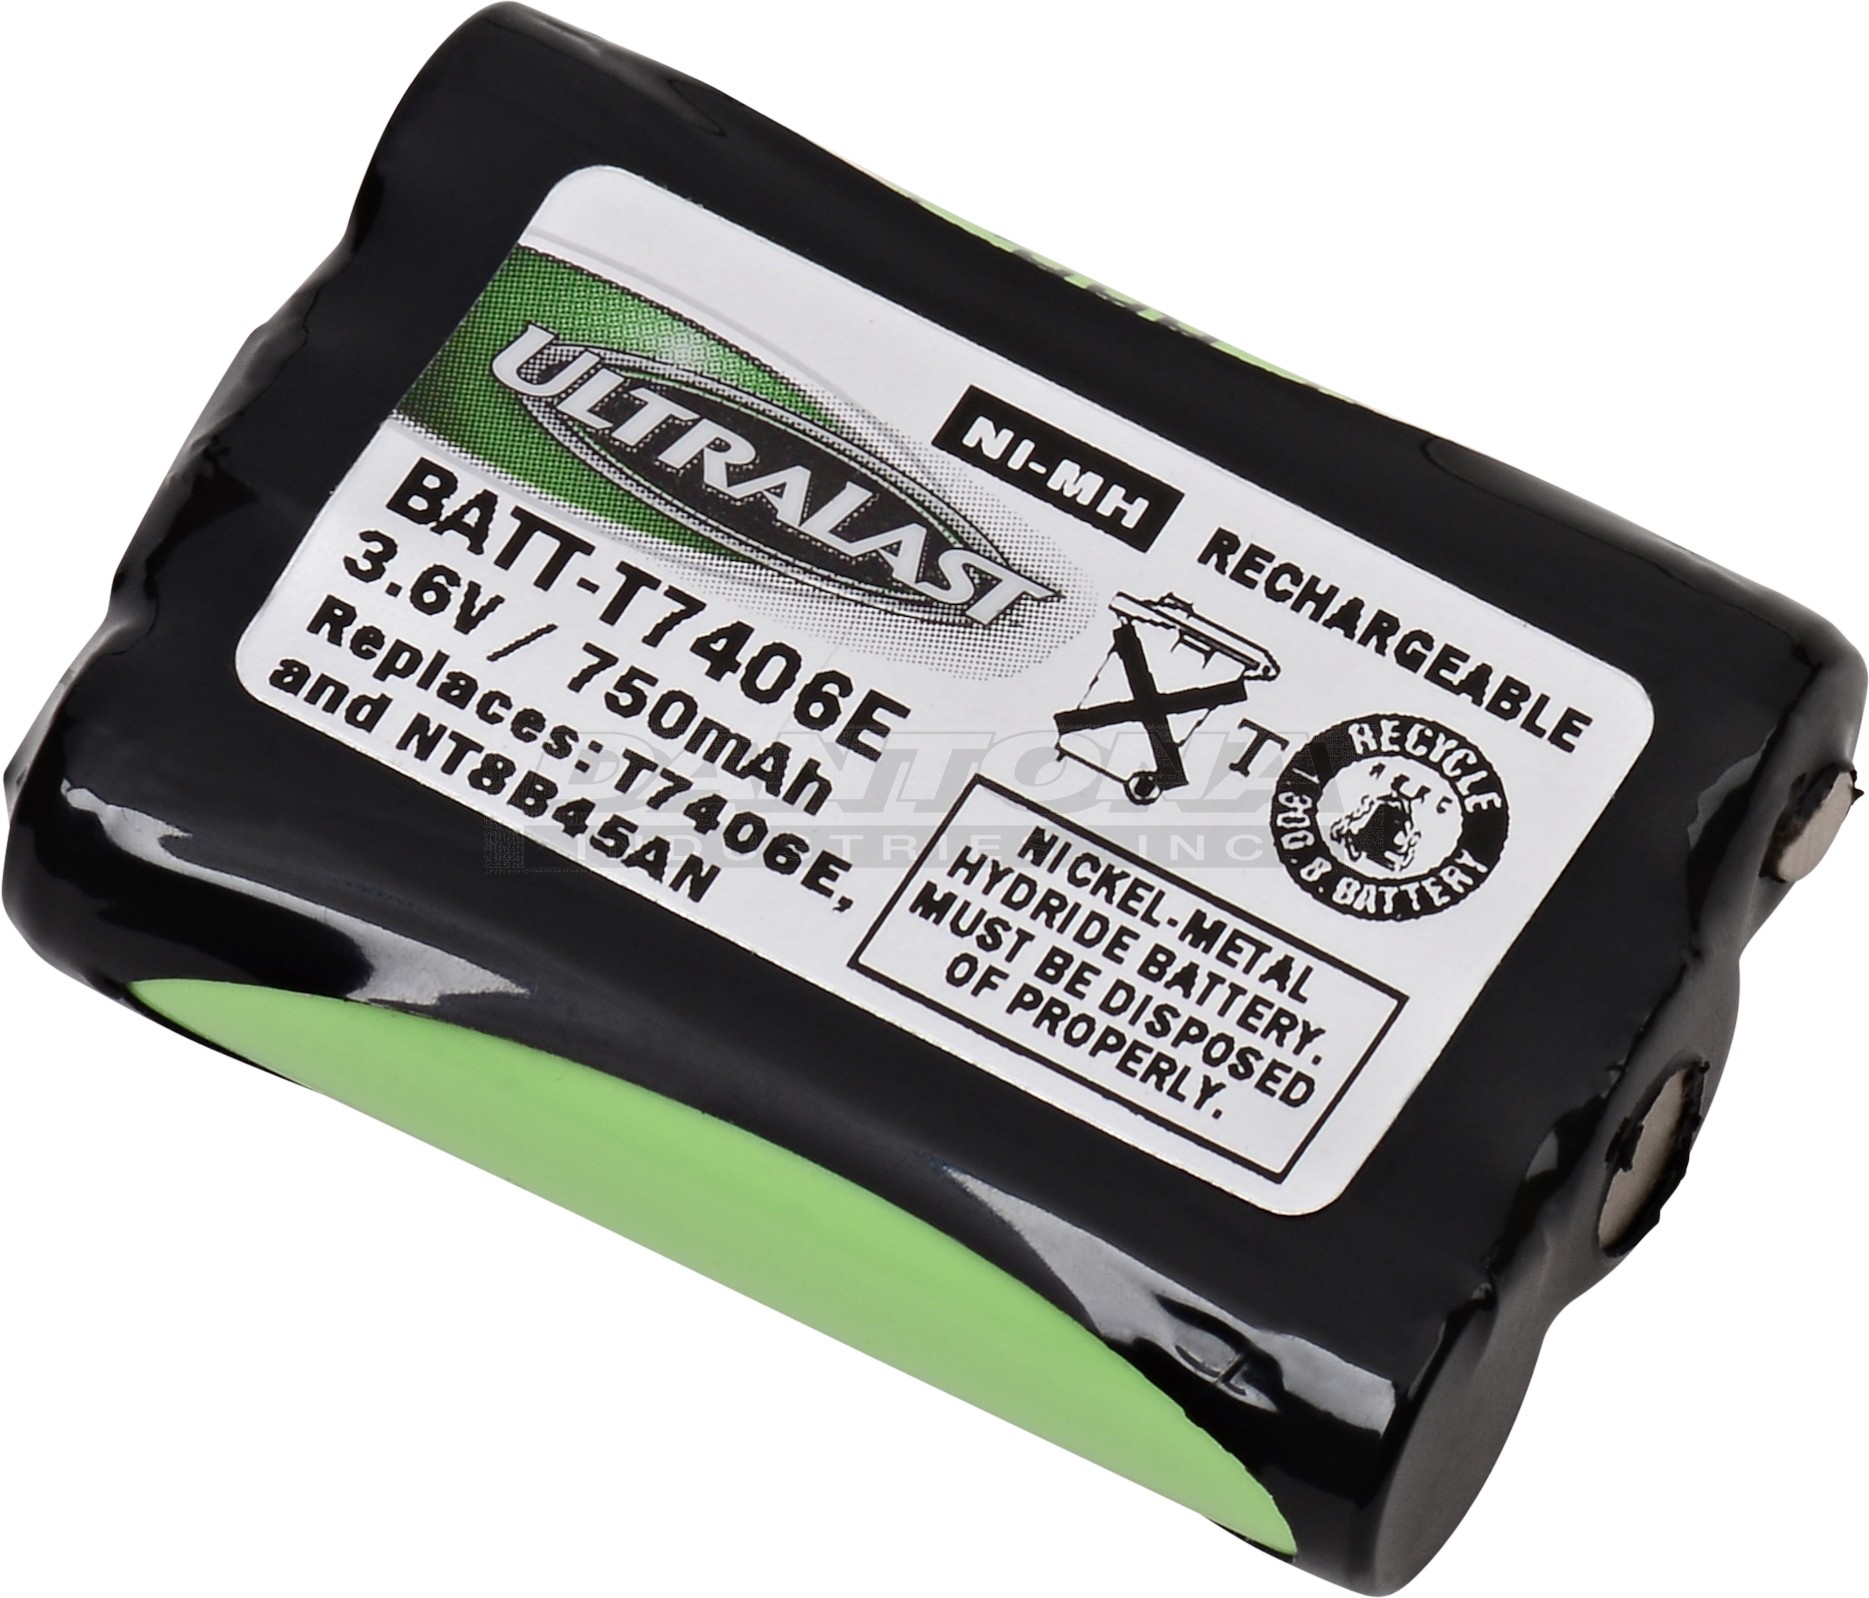 BATT-T7406E - Ni-MH,3.6 Volt, 750 mAh, Ultra Hi-Capacity Battery - Replacement Battery for Nortel N0063835 Cordless Phone Battery